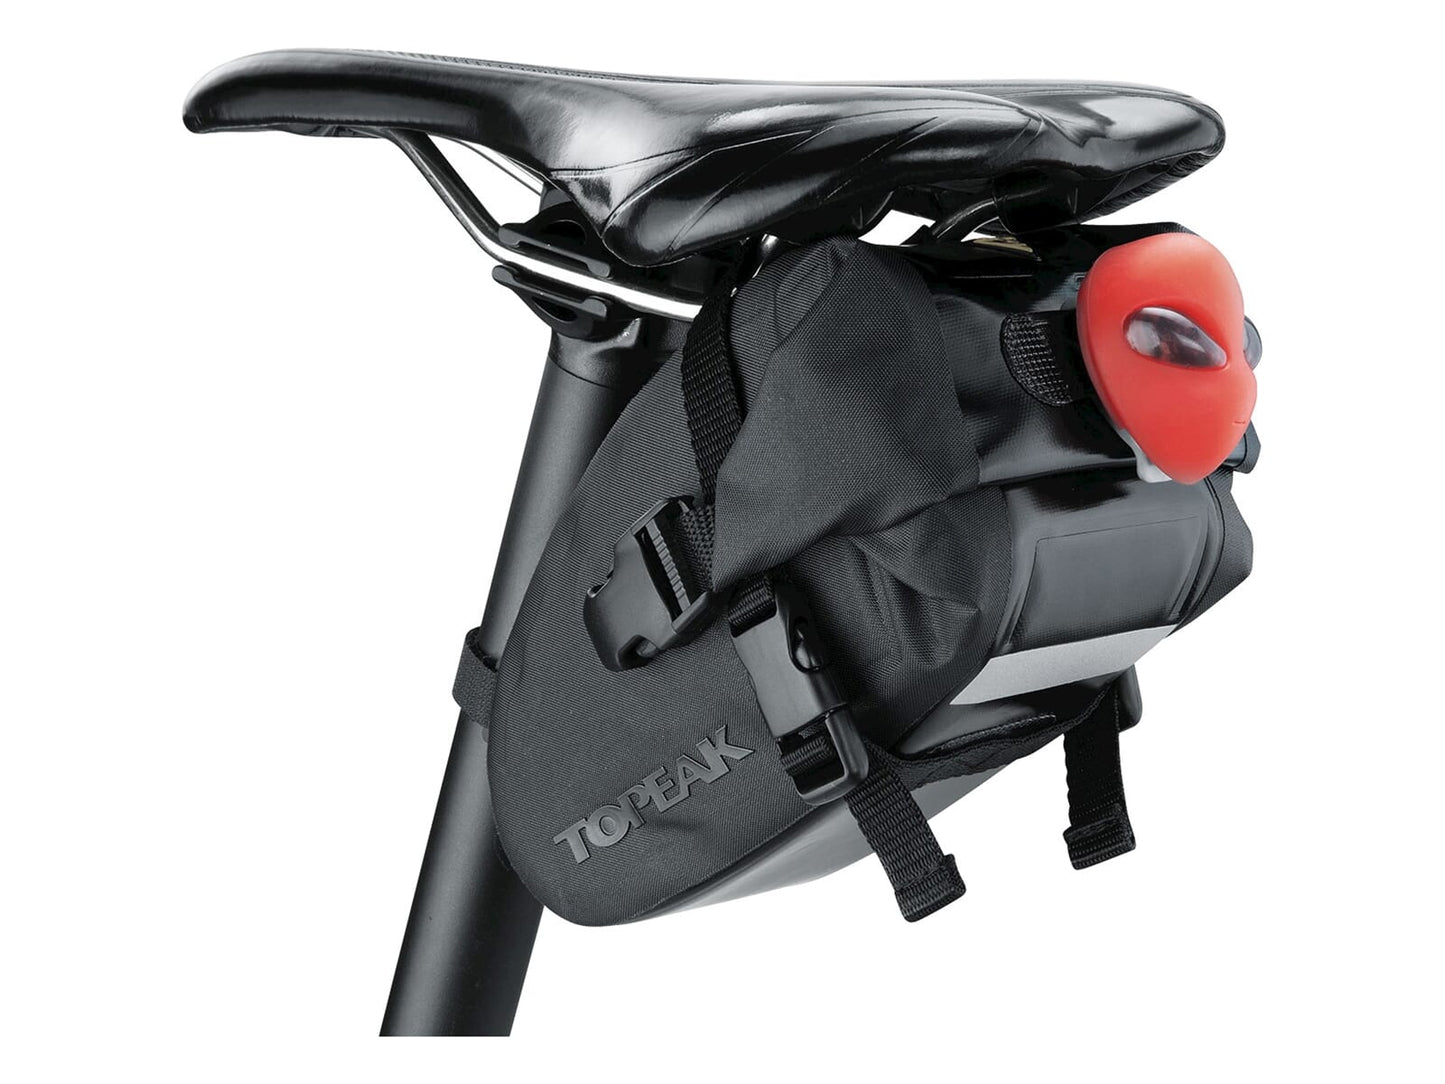 Topeak Drybag S - Bolsa de silla de montar impermeable - Negro - Bicicleta - 0.6L